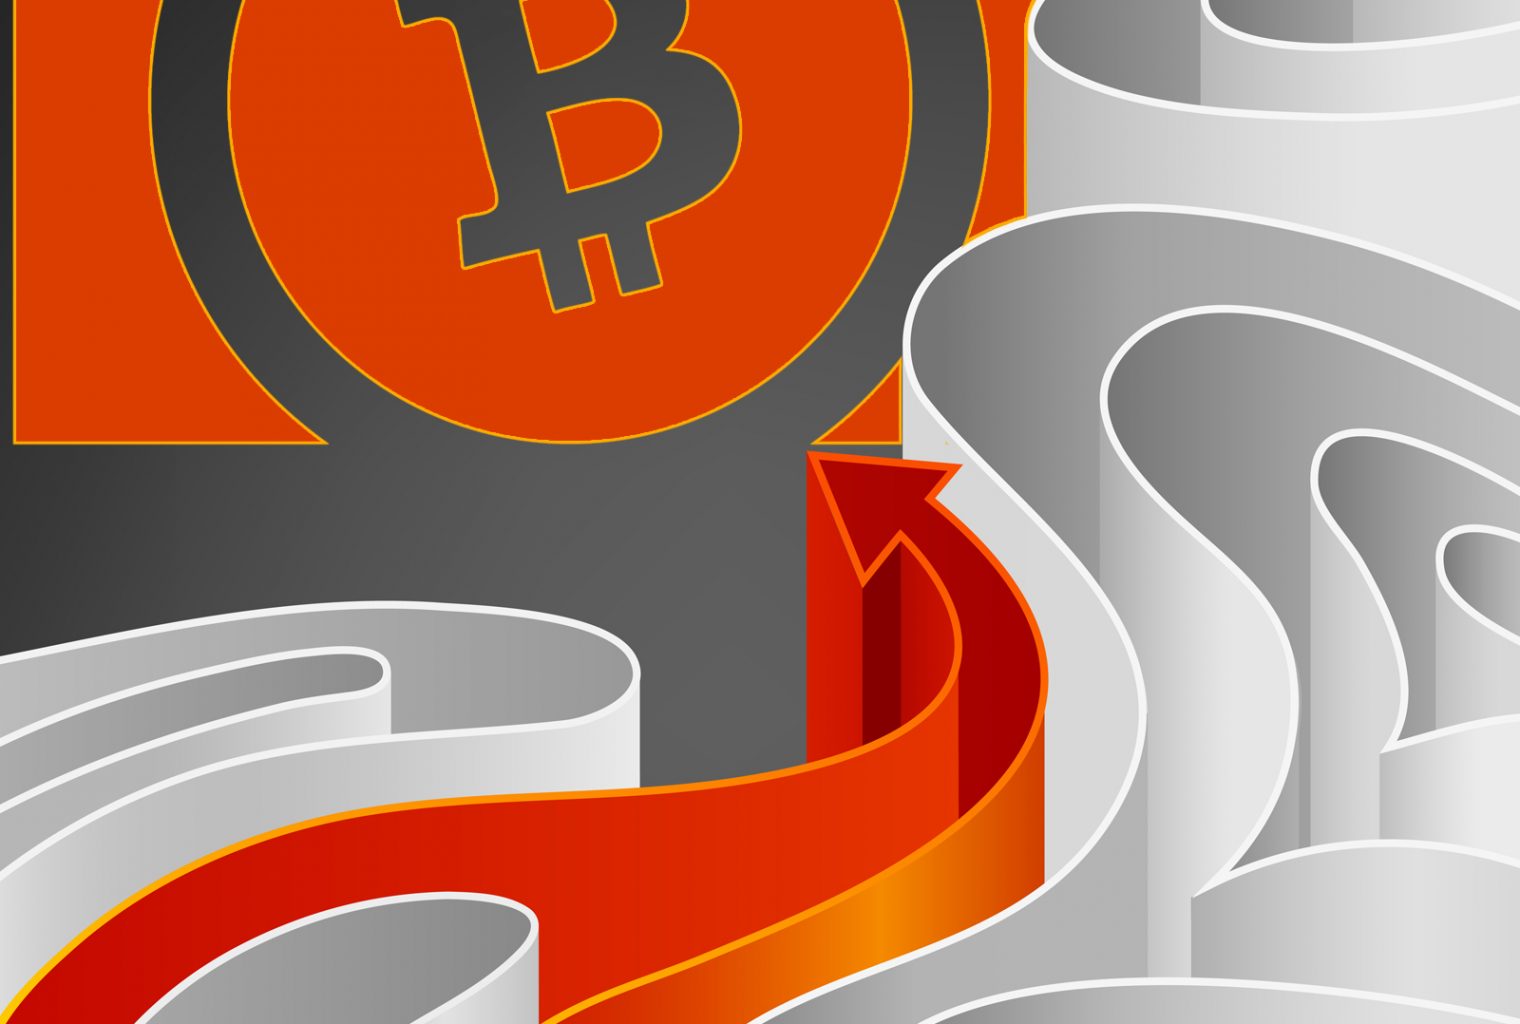 Bitcoin Cash Live Cost Files Bitcoin Blockchain Compositing Pro - 